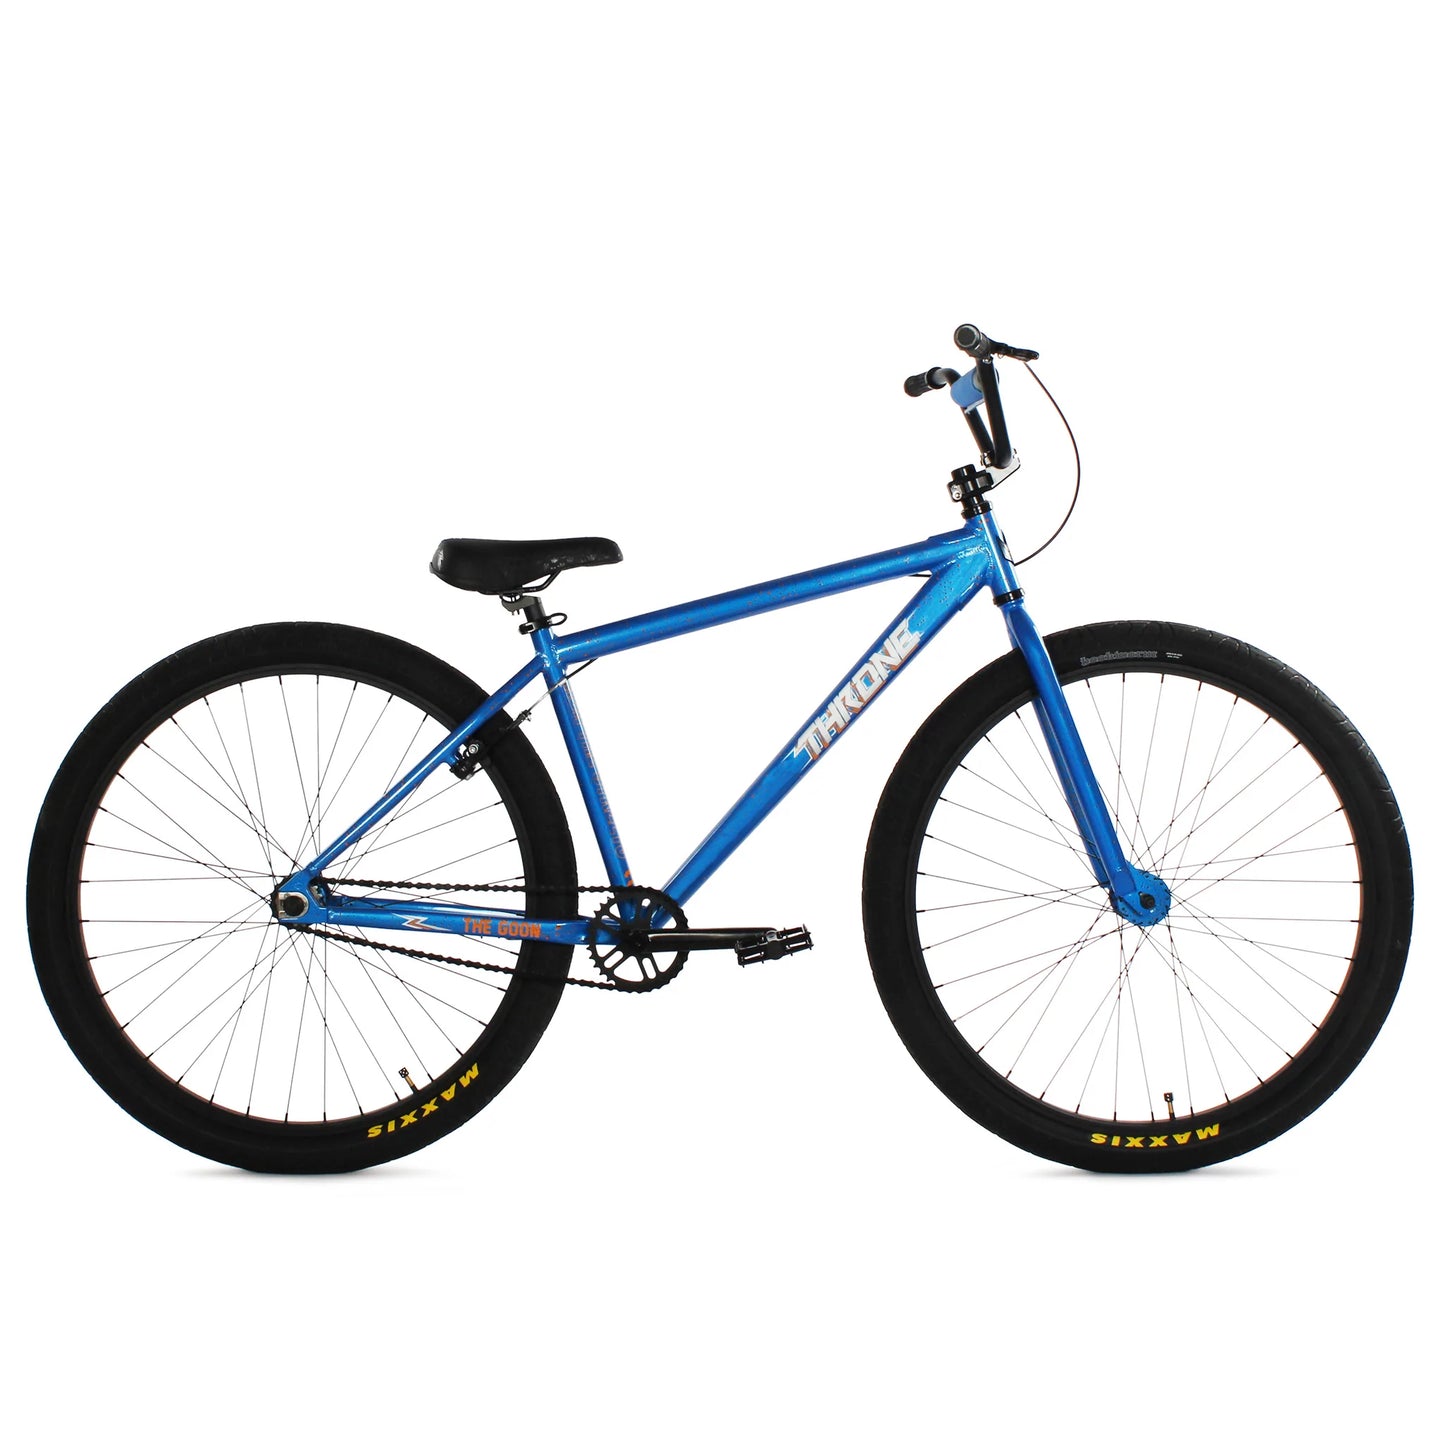 Throne Cycles The Goon - Blue Crush | Fixed Gear Urban BMX Bike | Urban Bike | The Goon Cycle | Throne Cycle | Street Cycle | Throne BMX | BMX Bike | Bike Lover USA